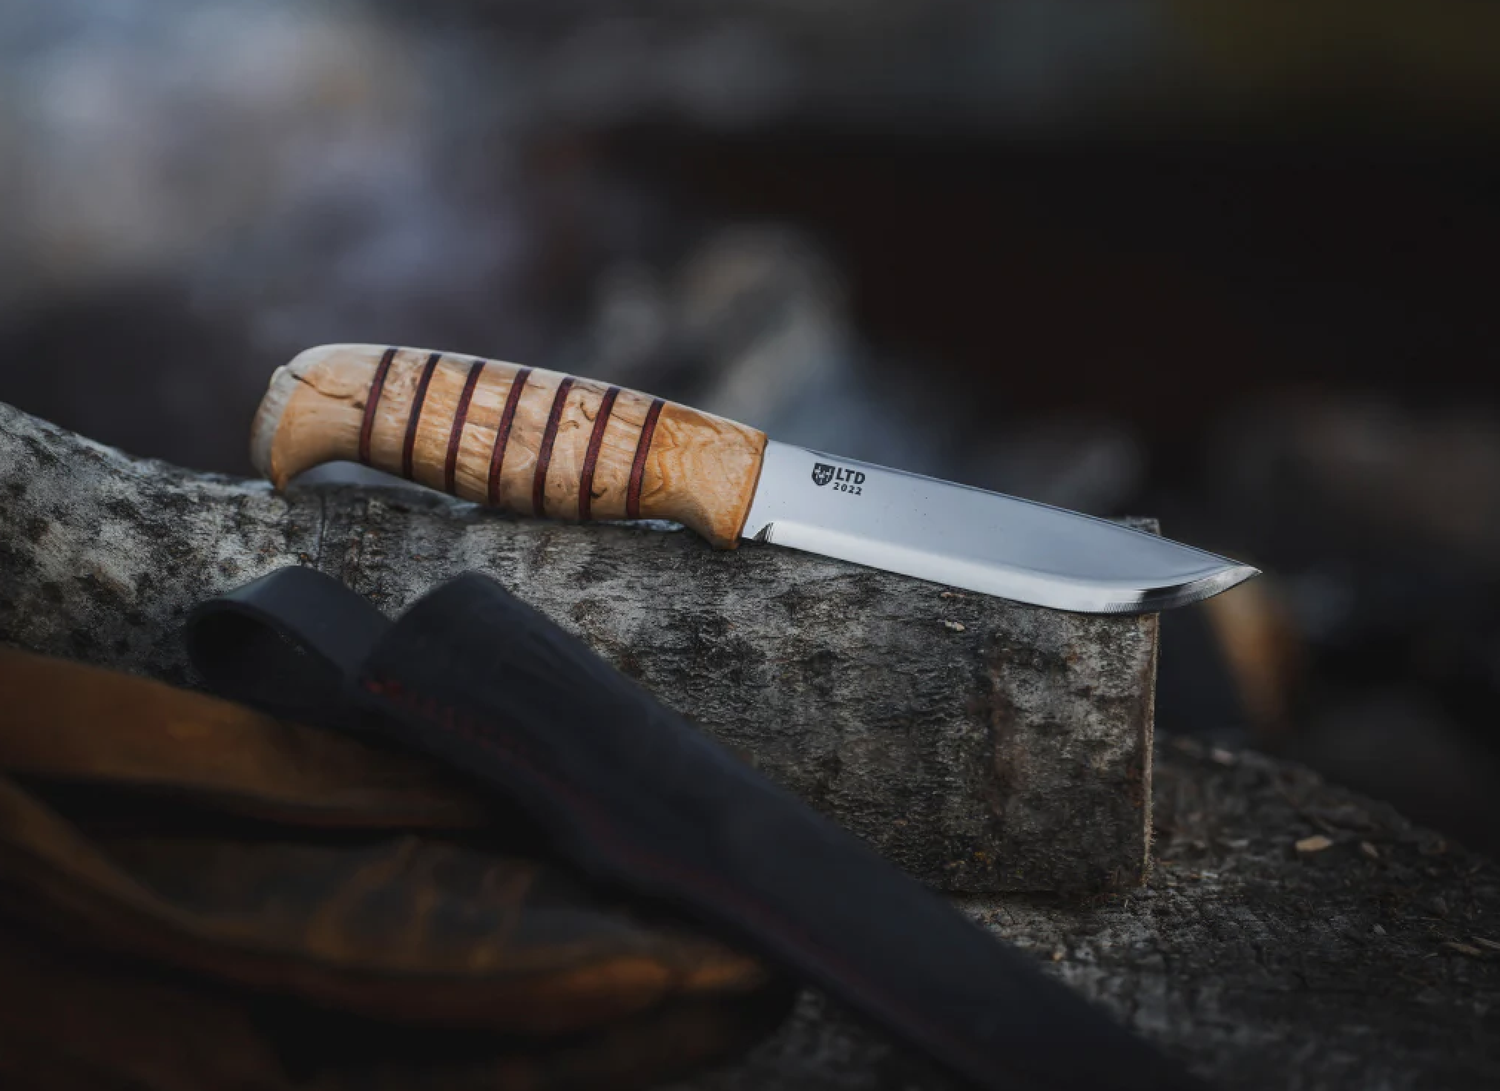 Mora Wood Carving Basic Knife